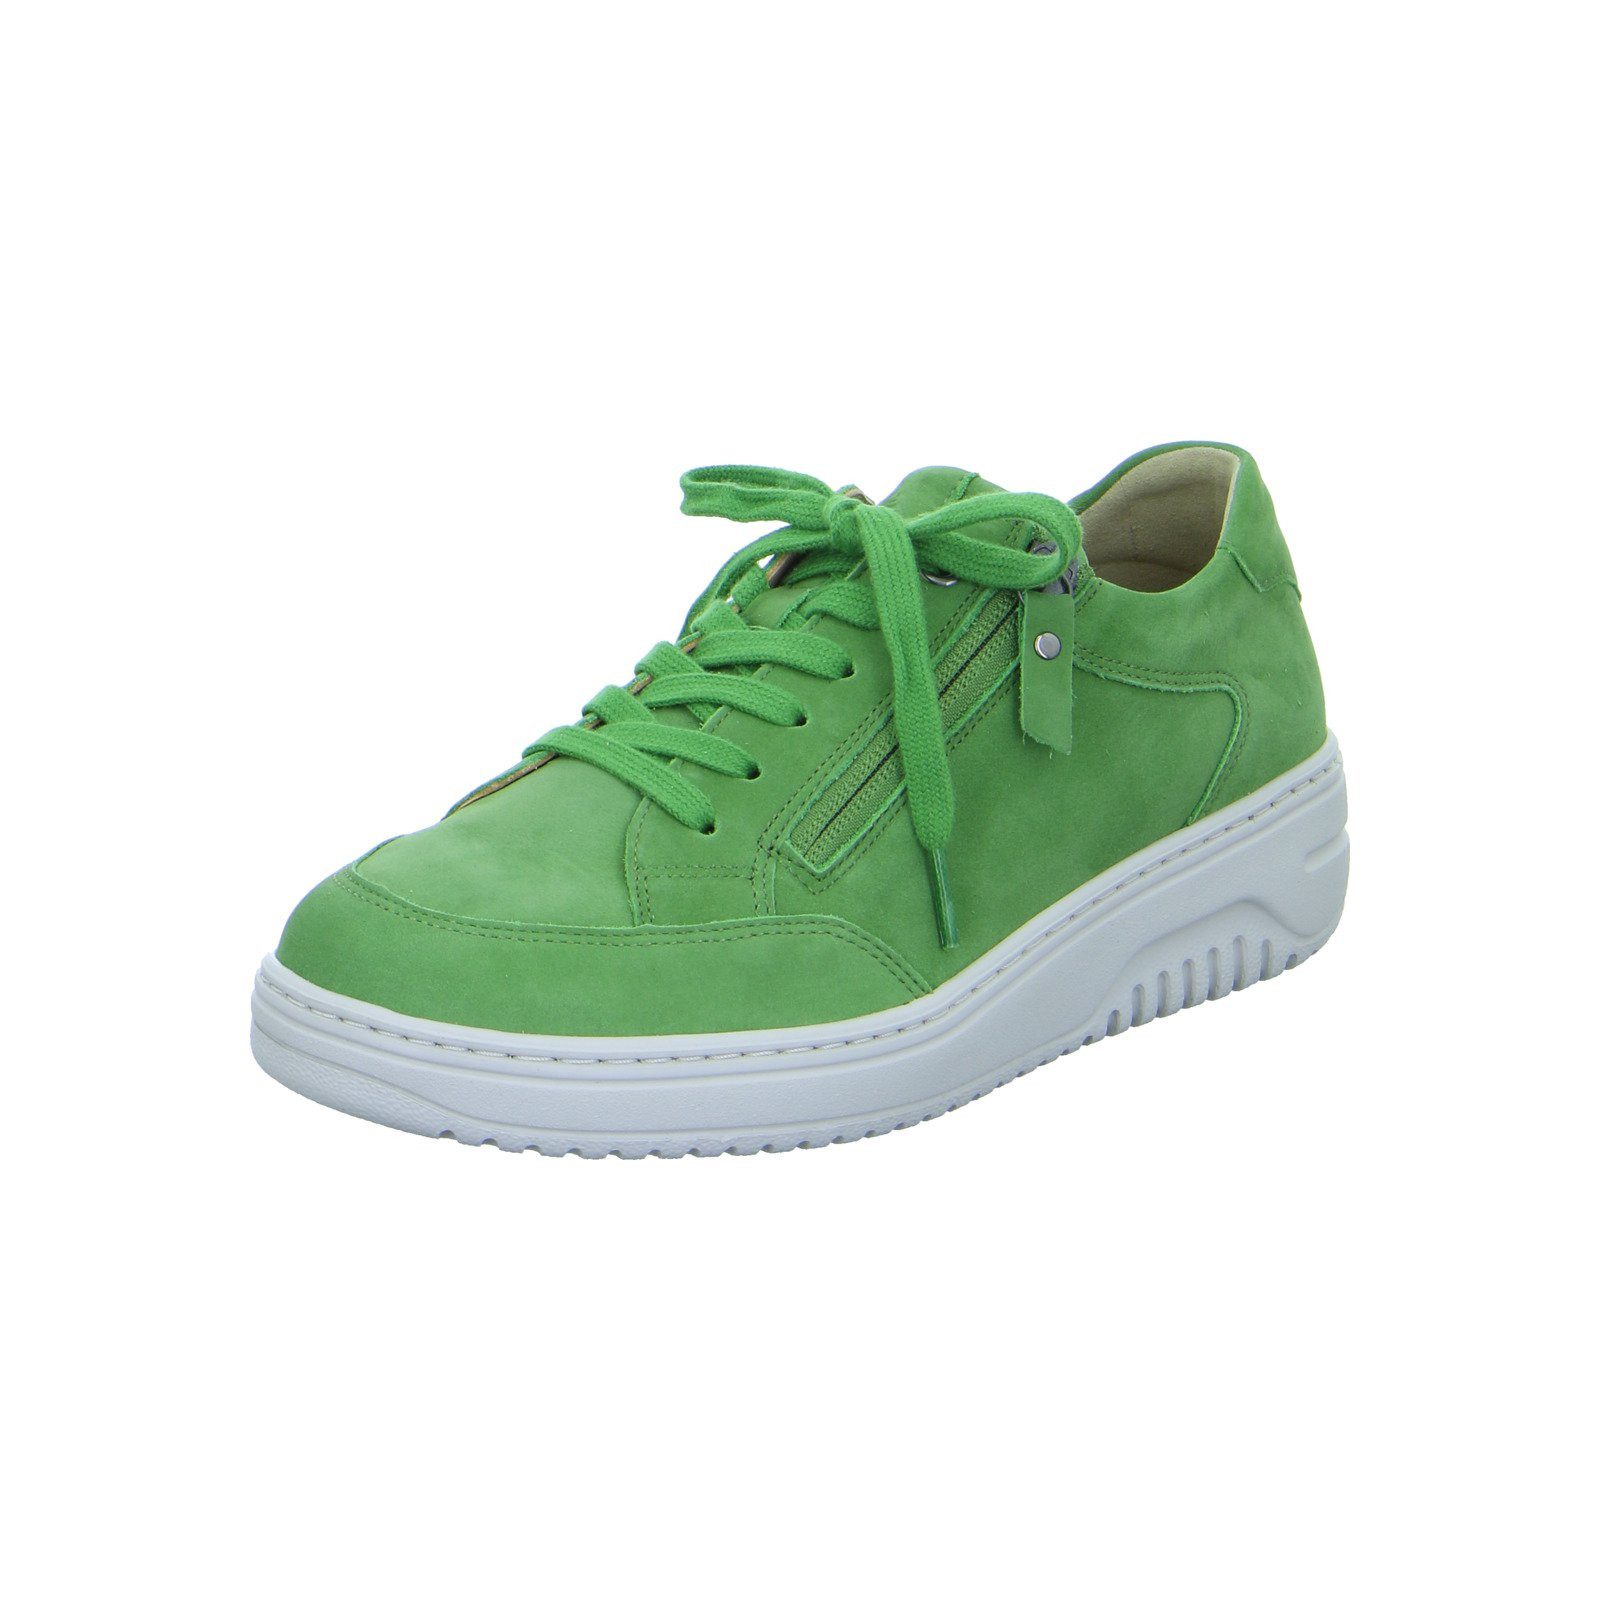 Hartjes Soul - Damen Schuhe Schnürschuh Sneaker Nubuk grün